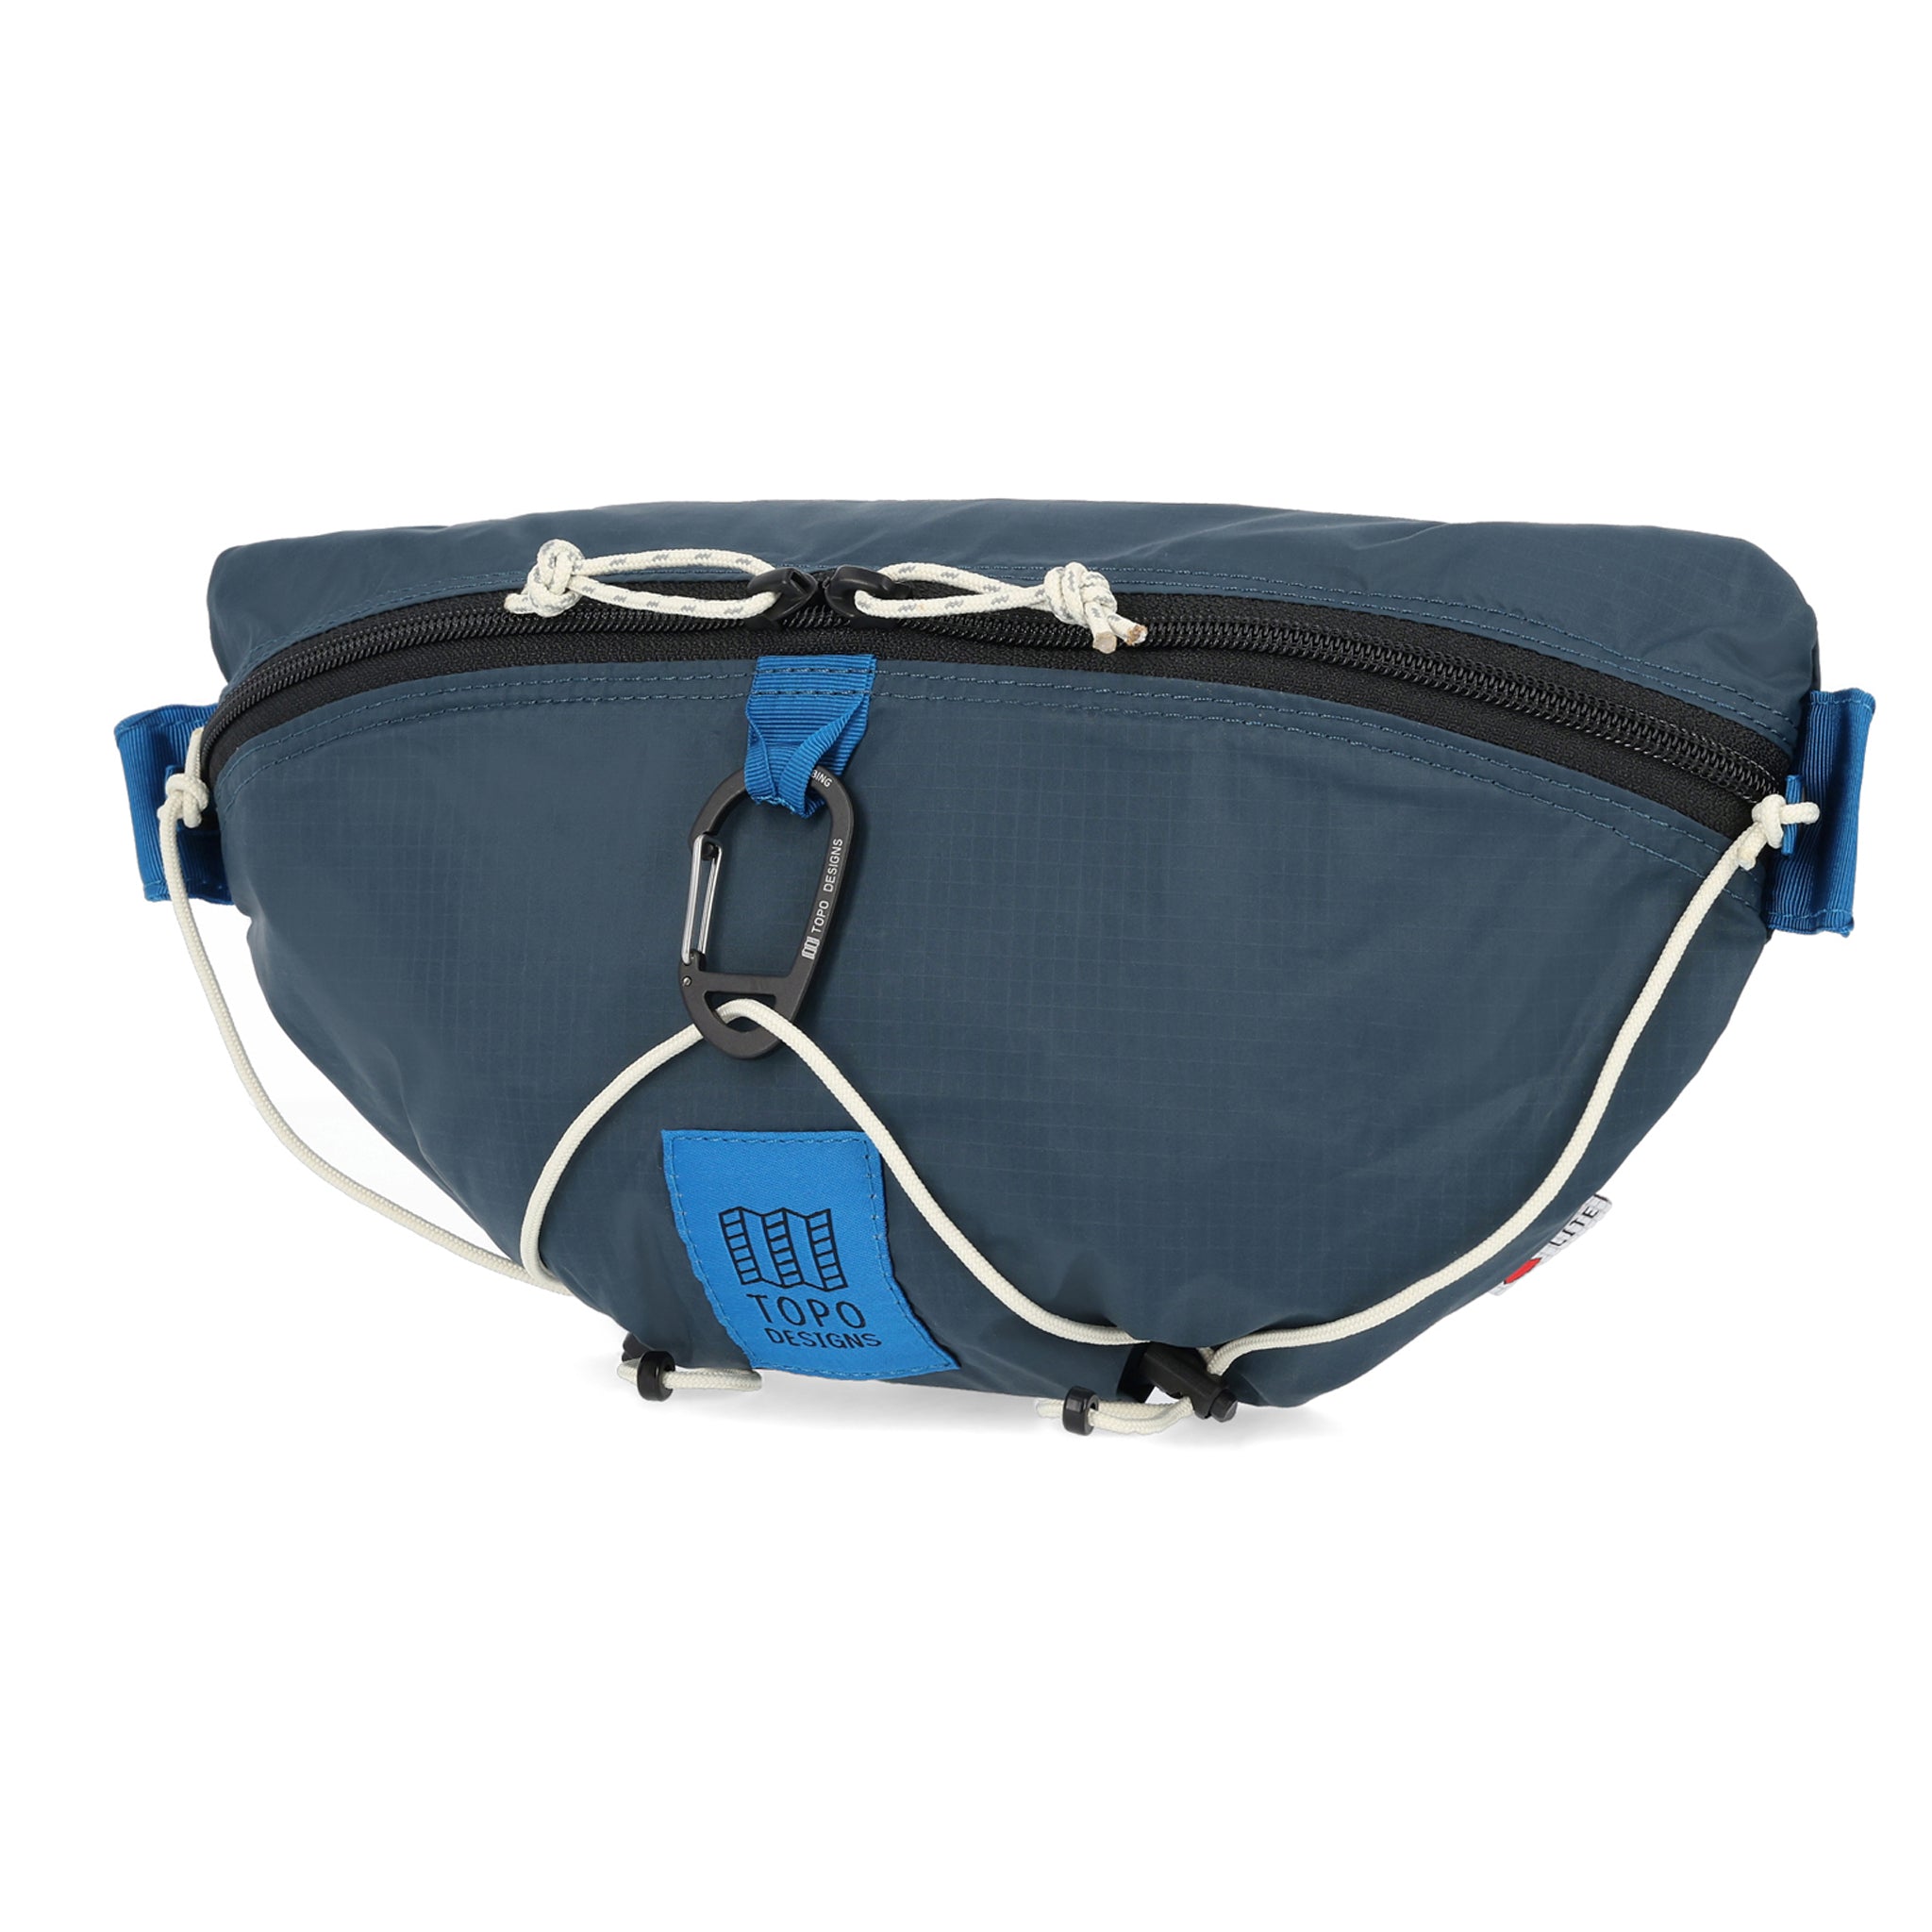 Topo Designs TopoLite Hip Pack Ultralight fanny pack crossbody bum bag in "pond blue"